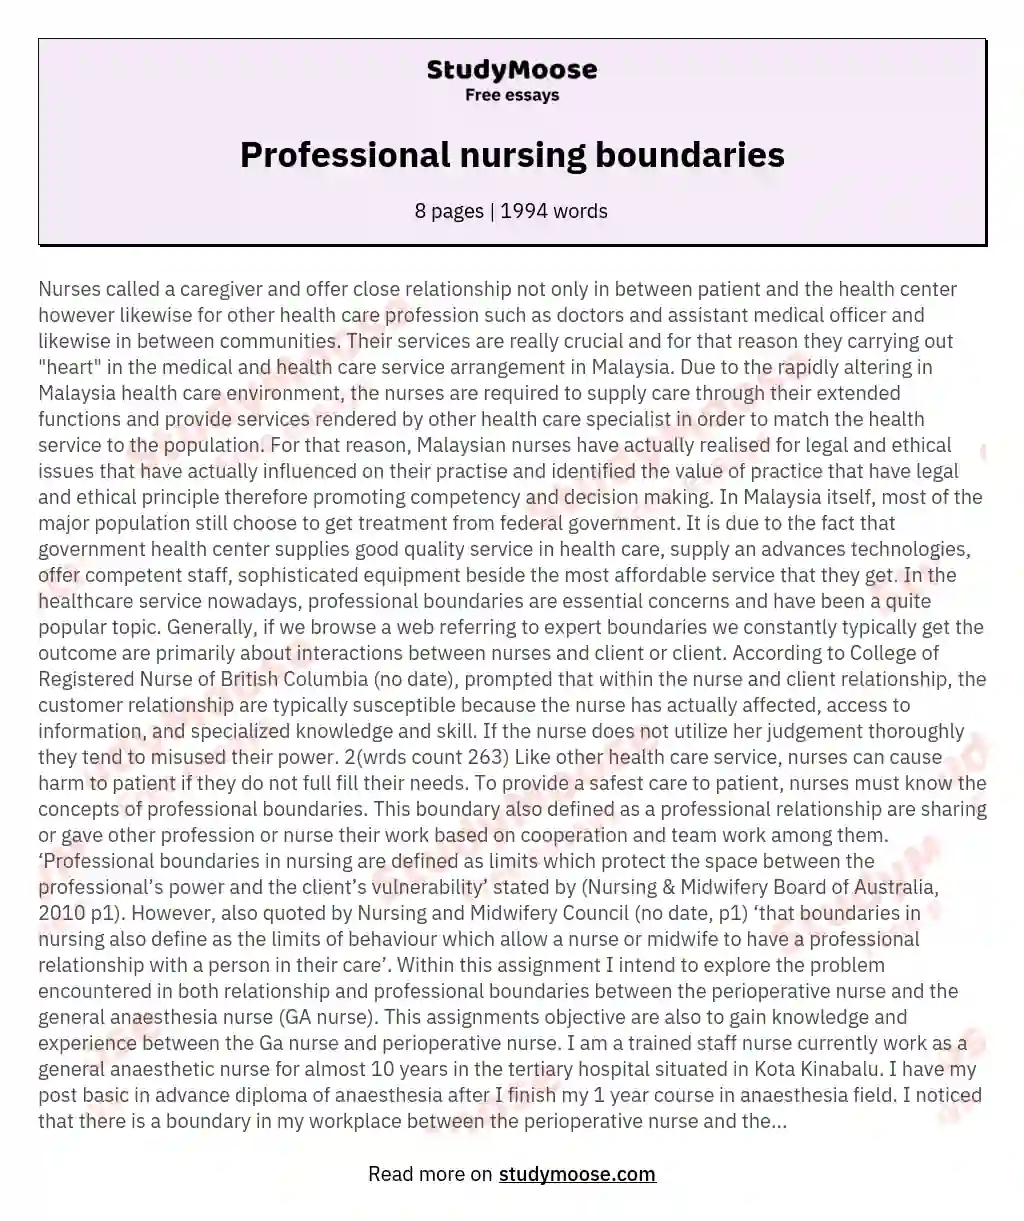 Professional nursing boundaries